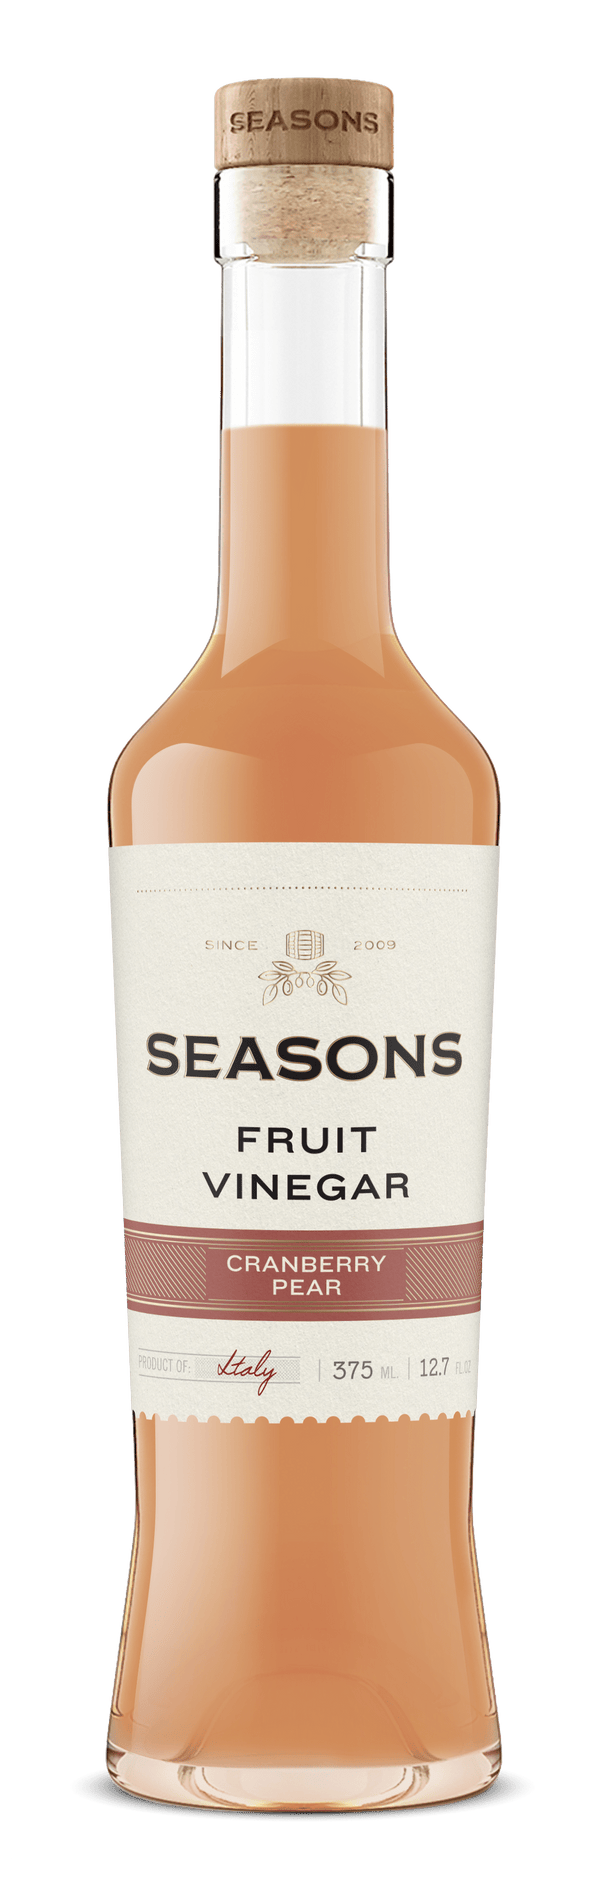 Seasons Fruit Vinegar 375mL Cranberry Pear